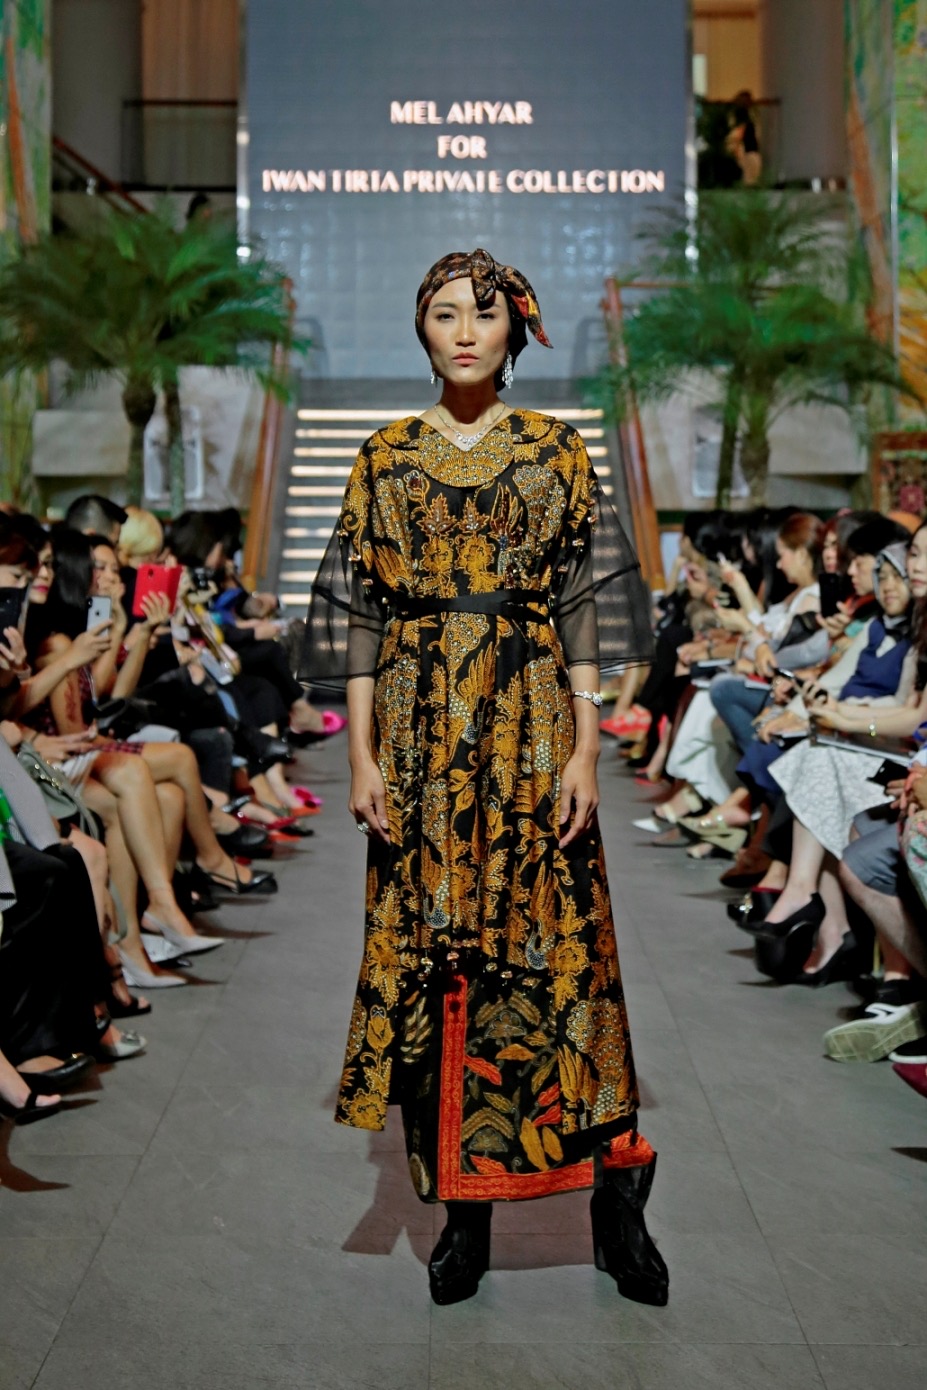 Model gaun batik unik